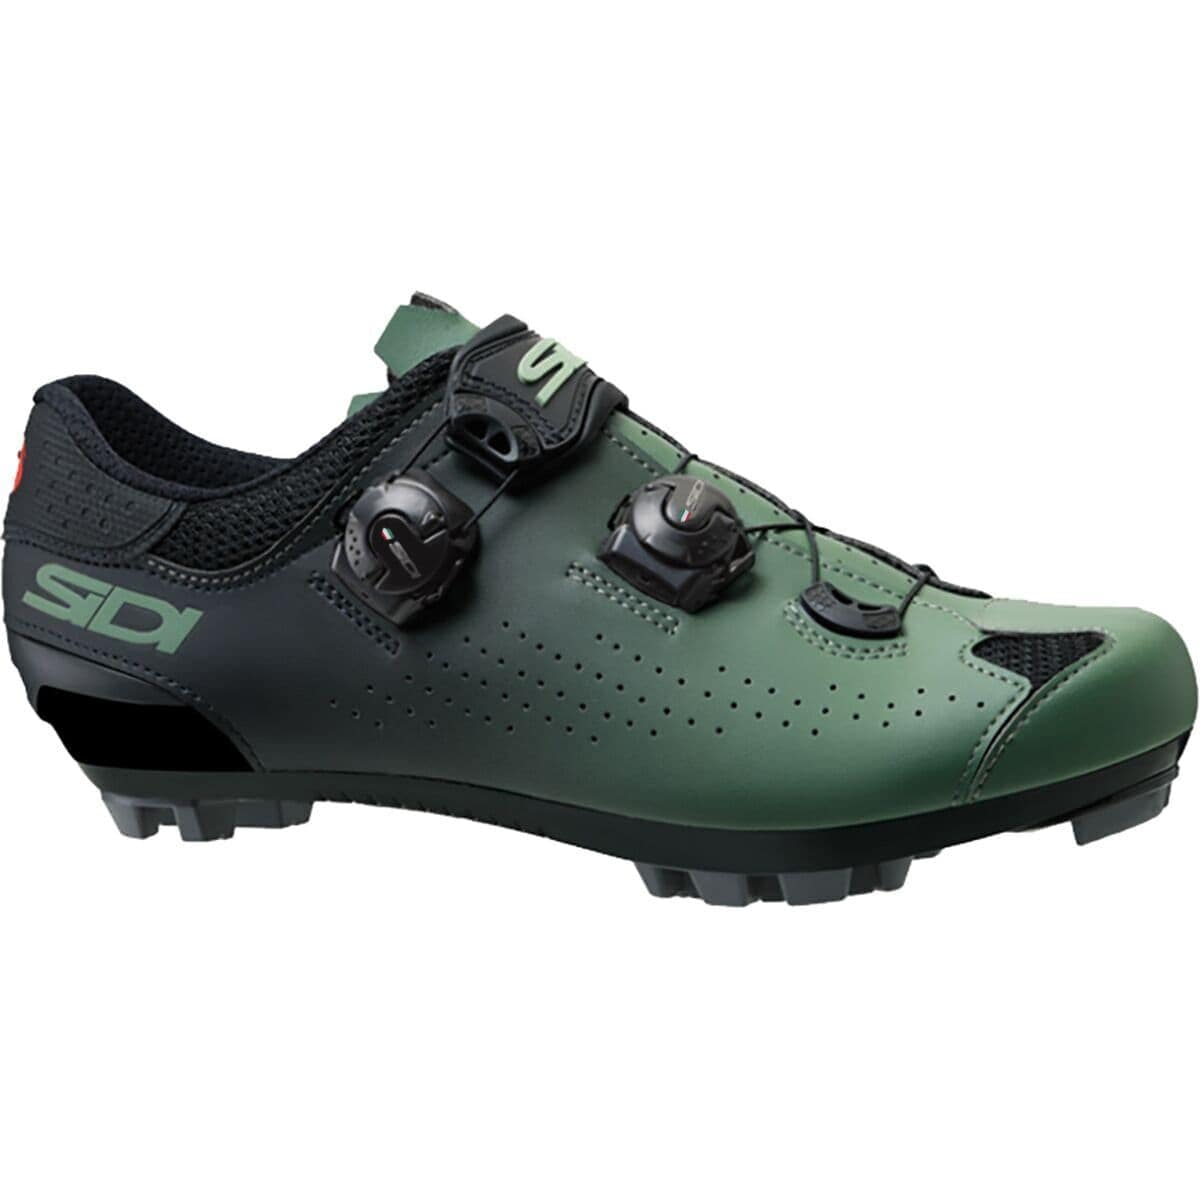 Sidi Eagle 10 Mountain Clipless Shoes - Men's Green/Black, 47.0